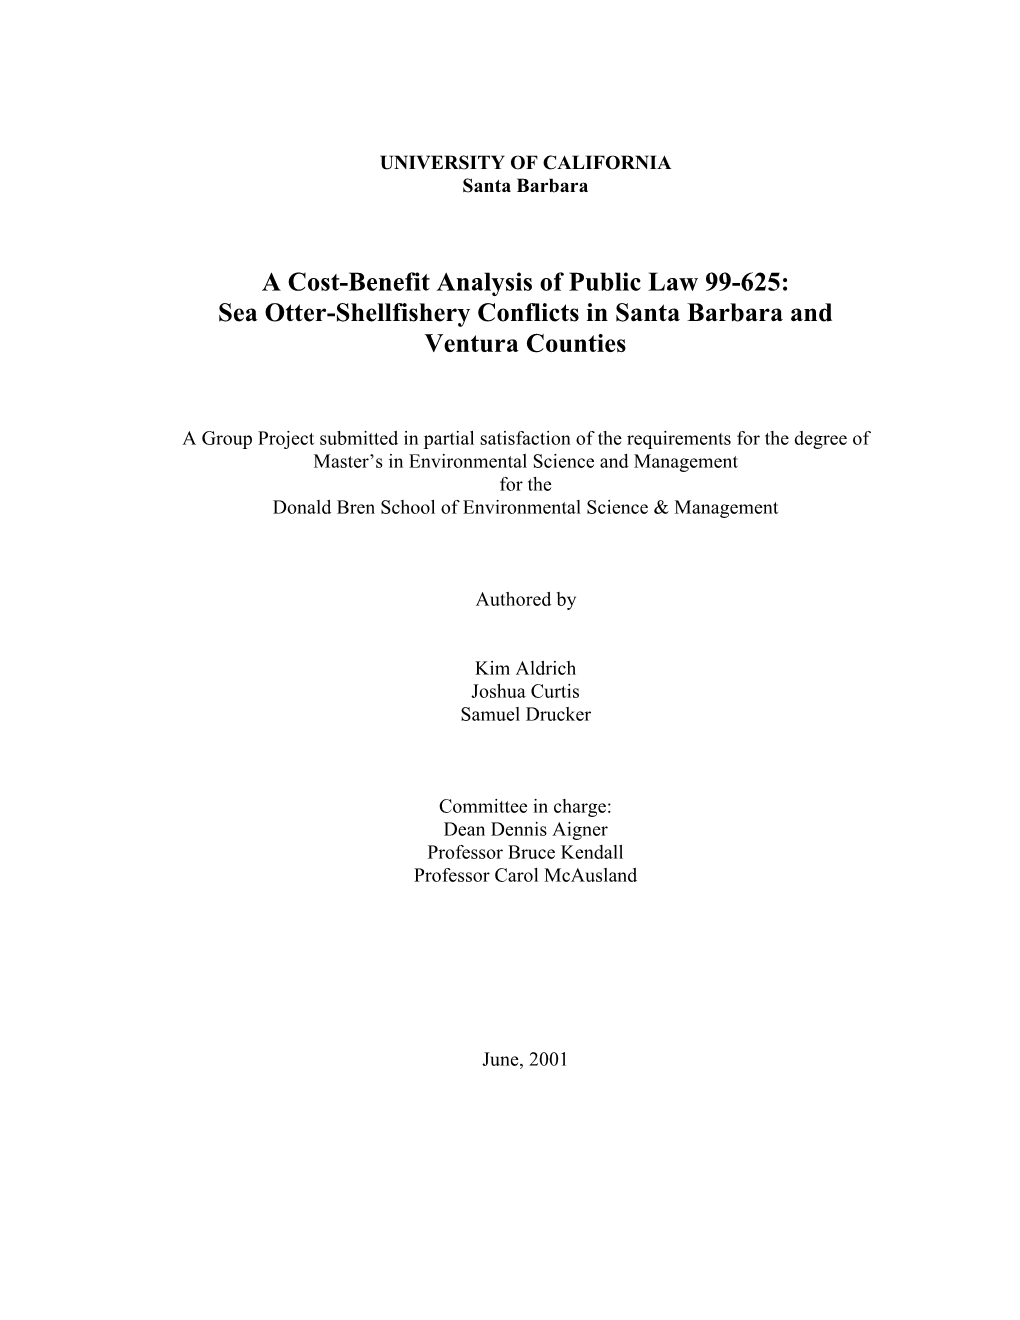 Sea Otter-Shellfishery Conflicts in Santa Barbara and Ventura Counties